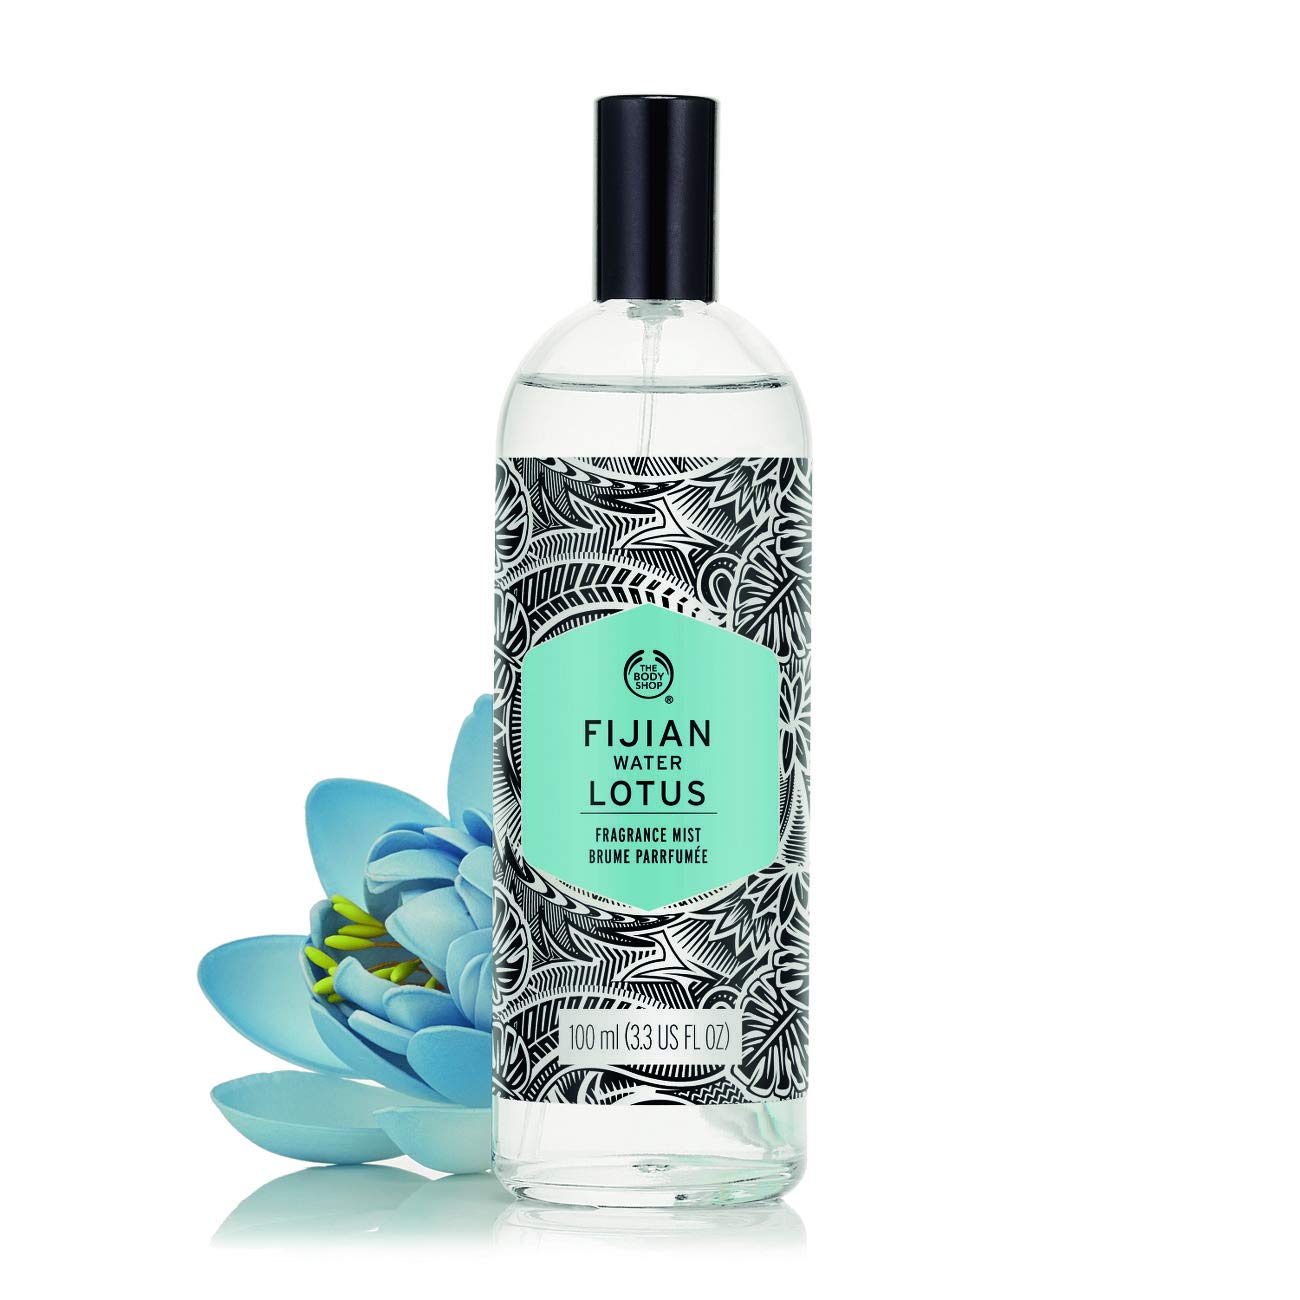 The Body Shop Fijian Water Lotus Fragrance Mist (100 ml) The Body Shop